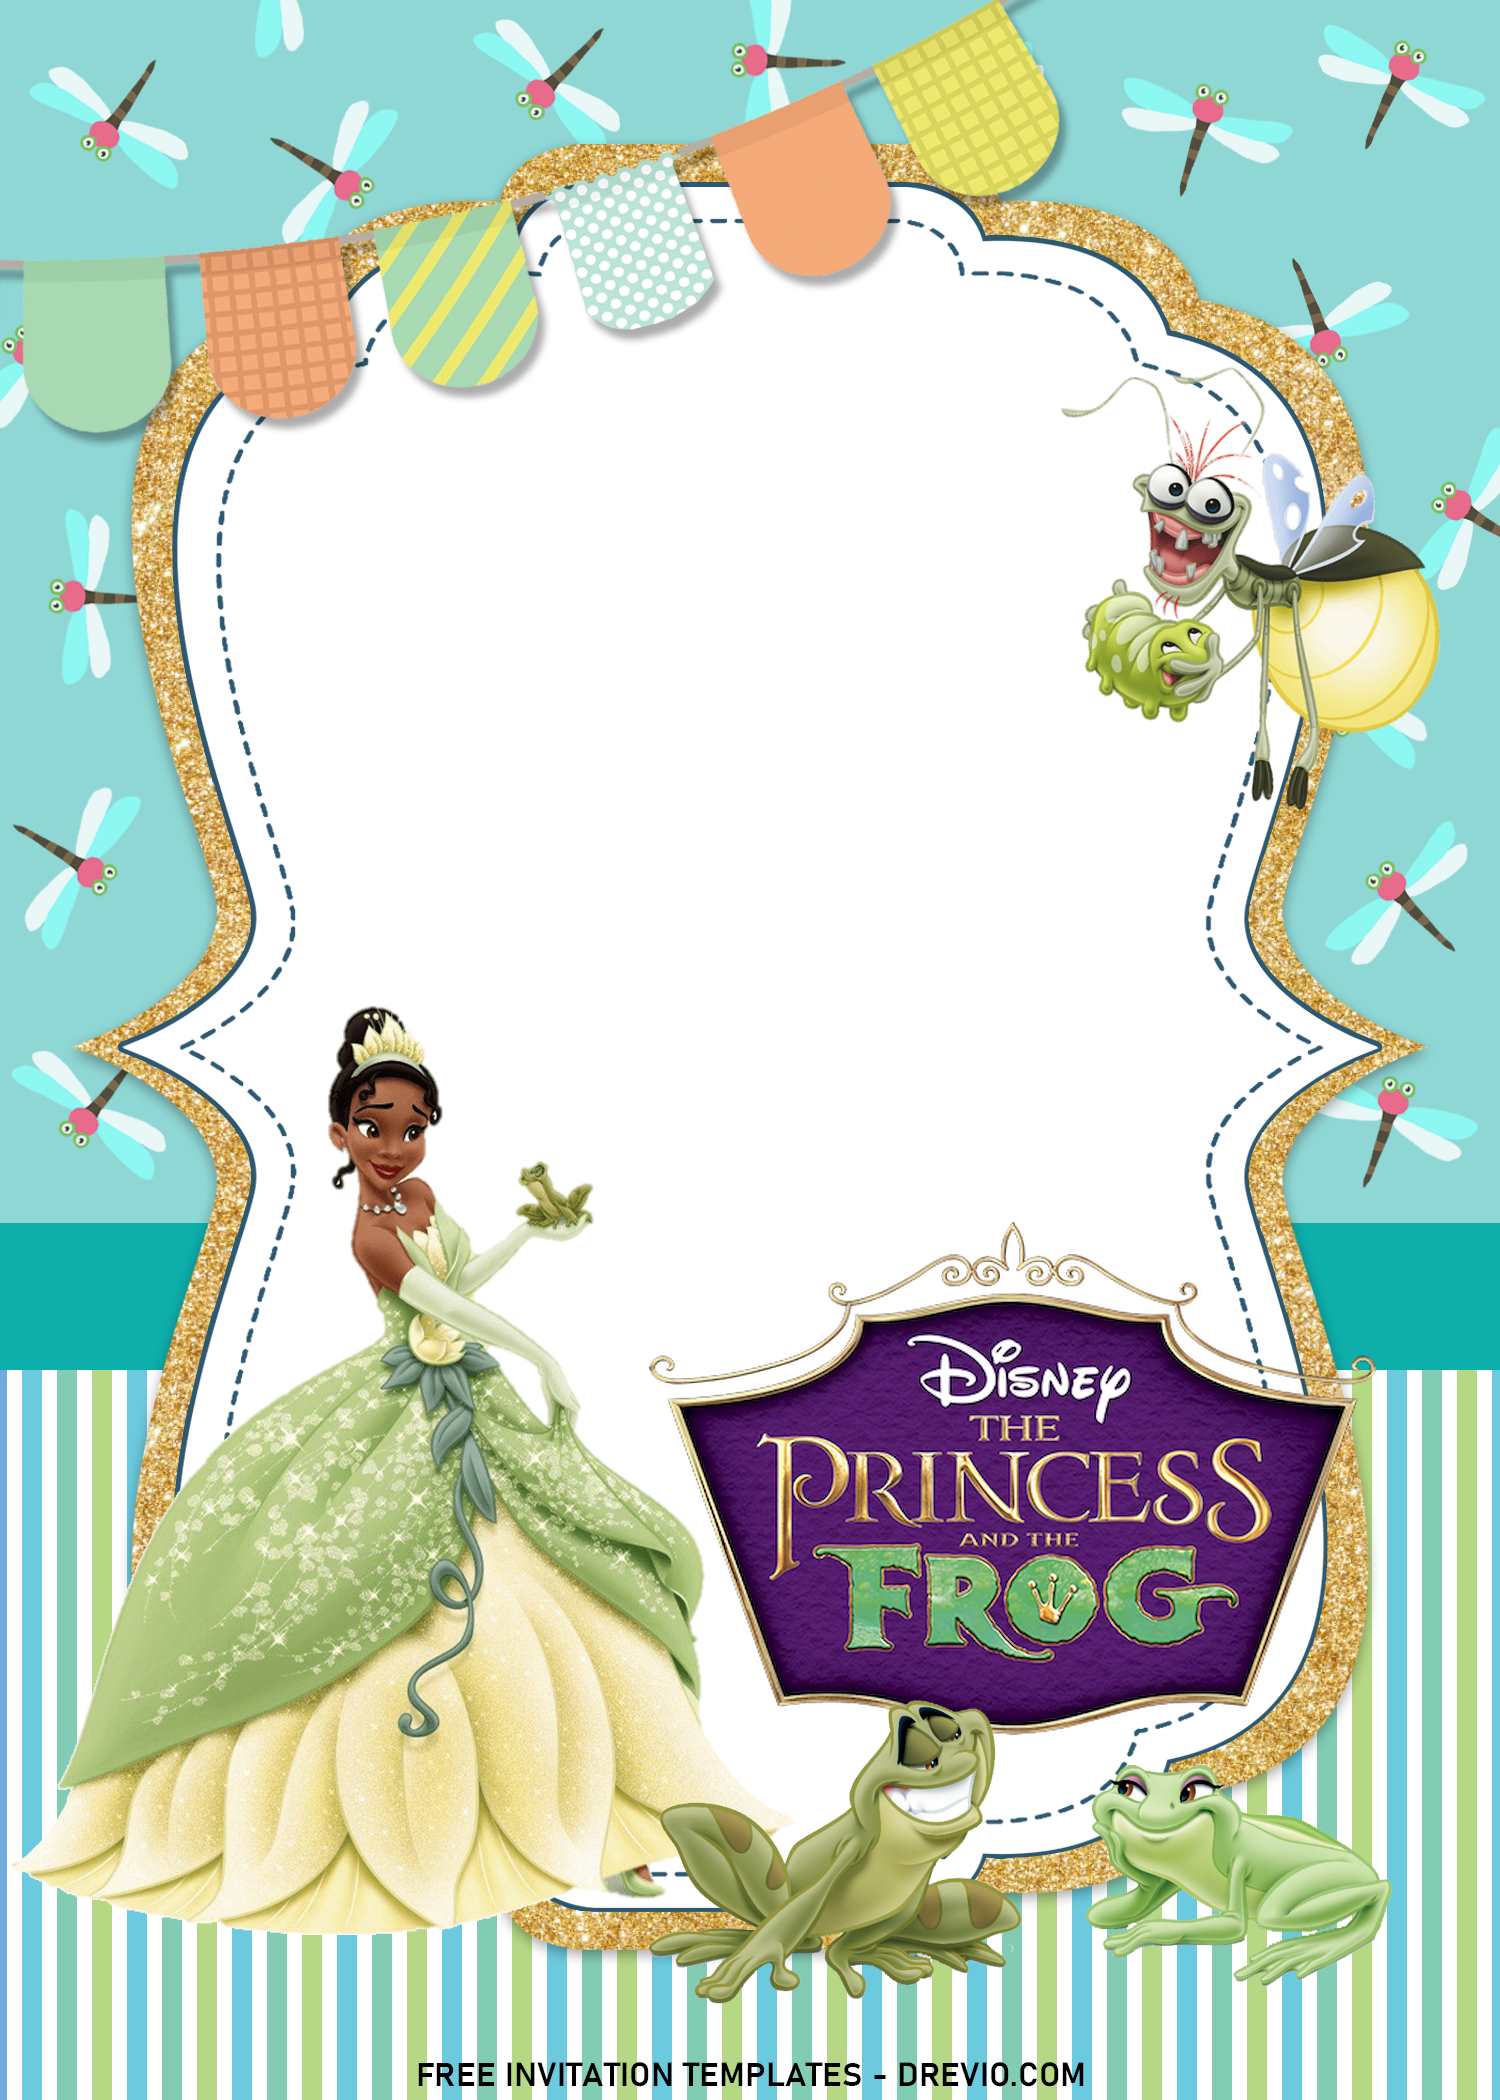 11+ Princess Tiana And The Frog Birthday Invitation Templates